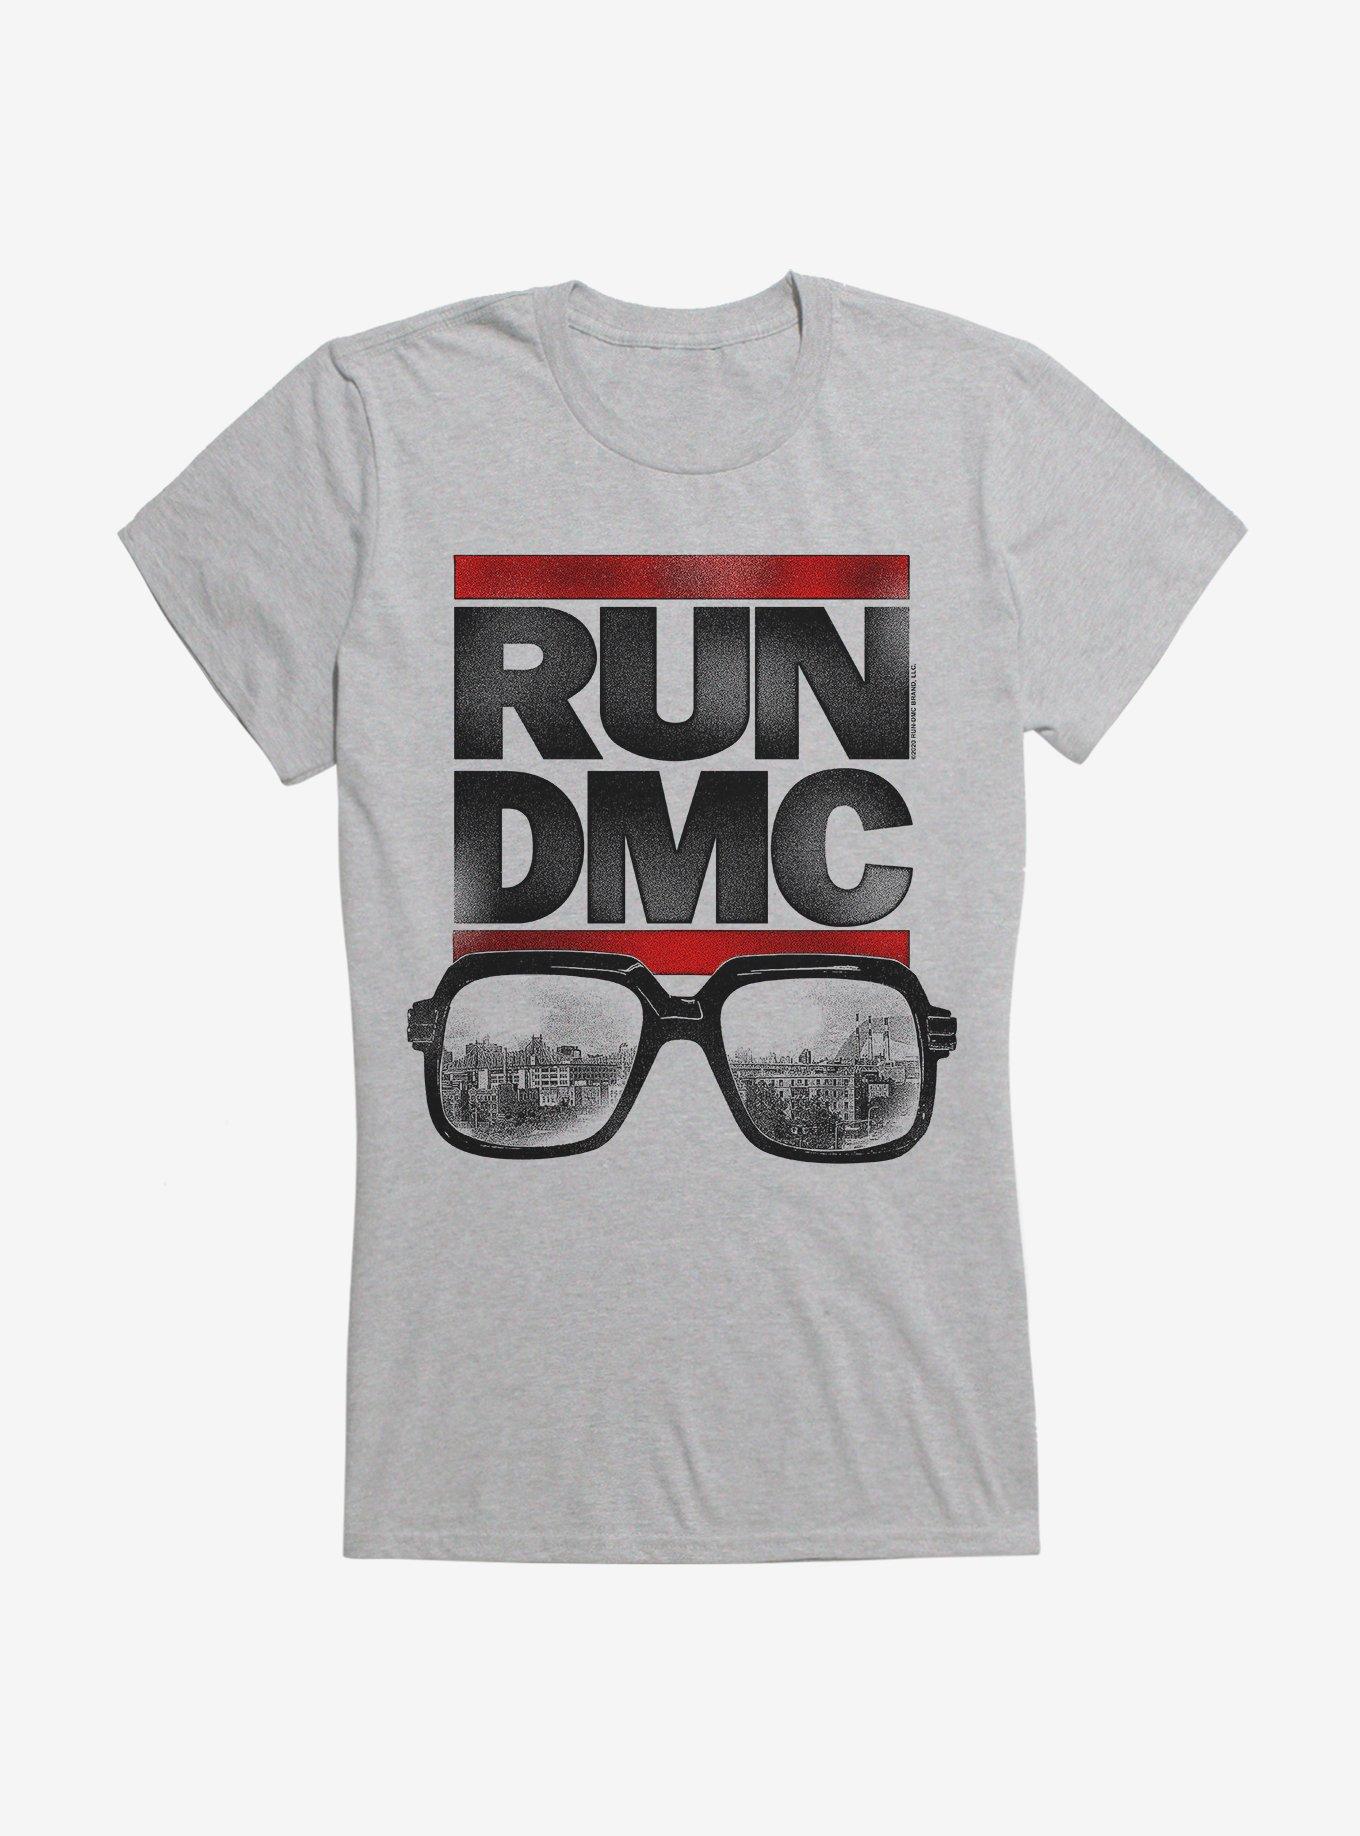 Run DMC NY Cityscape Glasses Girls T-Shirt, SPORT GRAY, hi-res